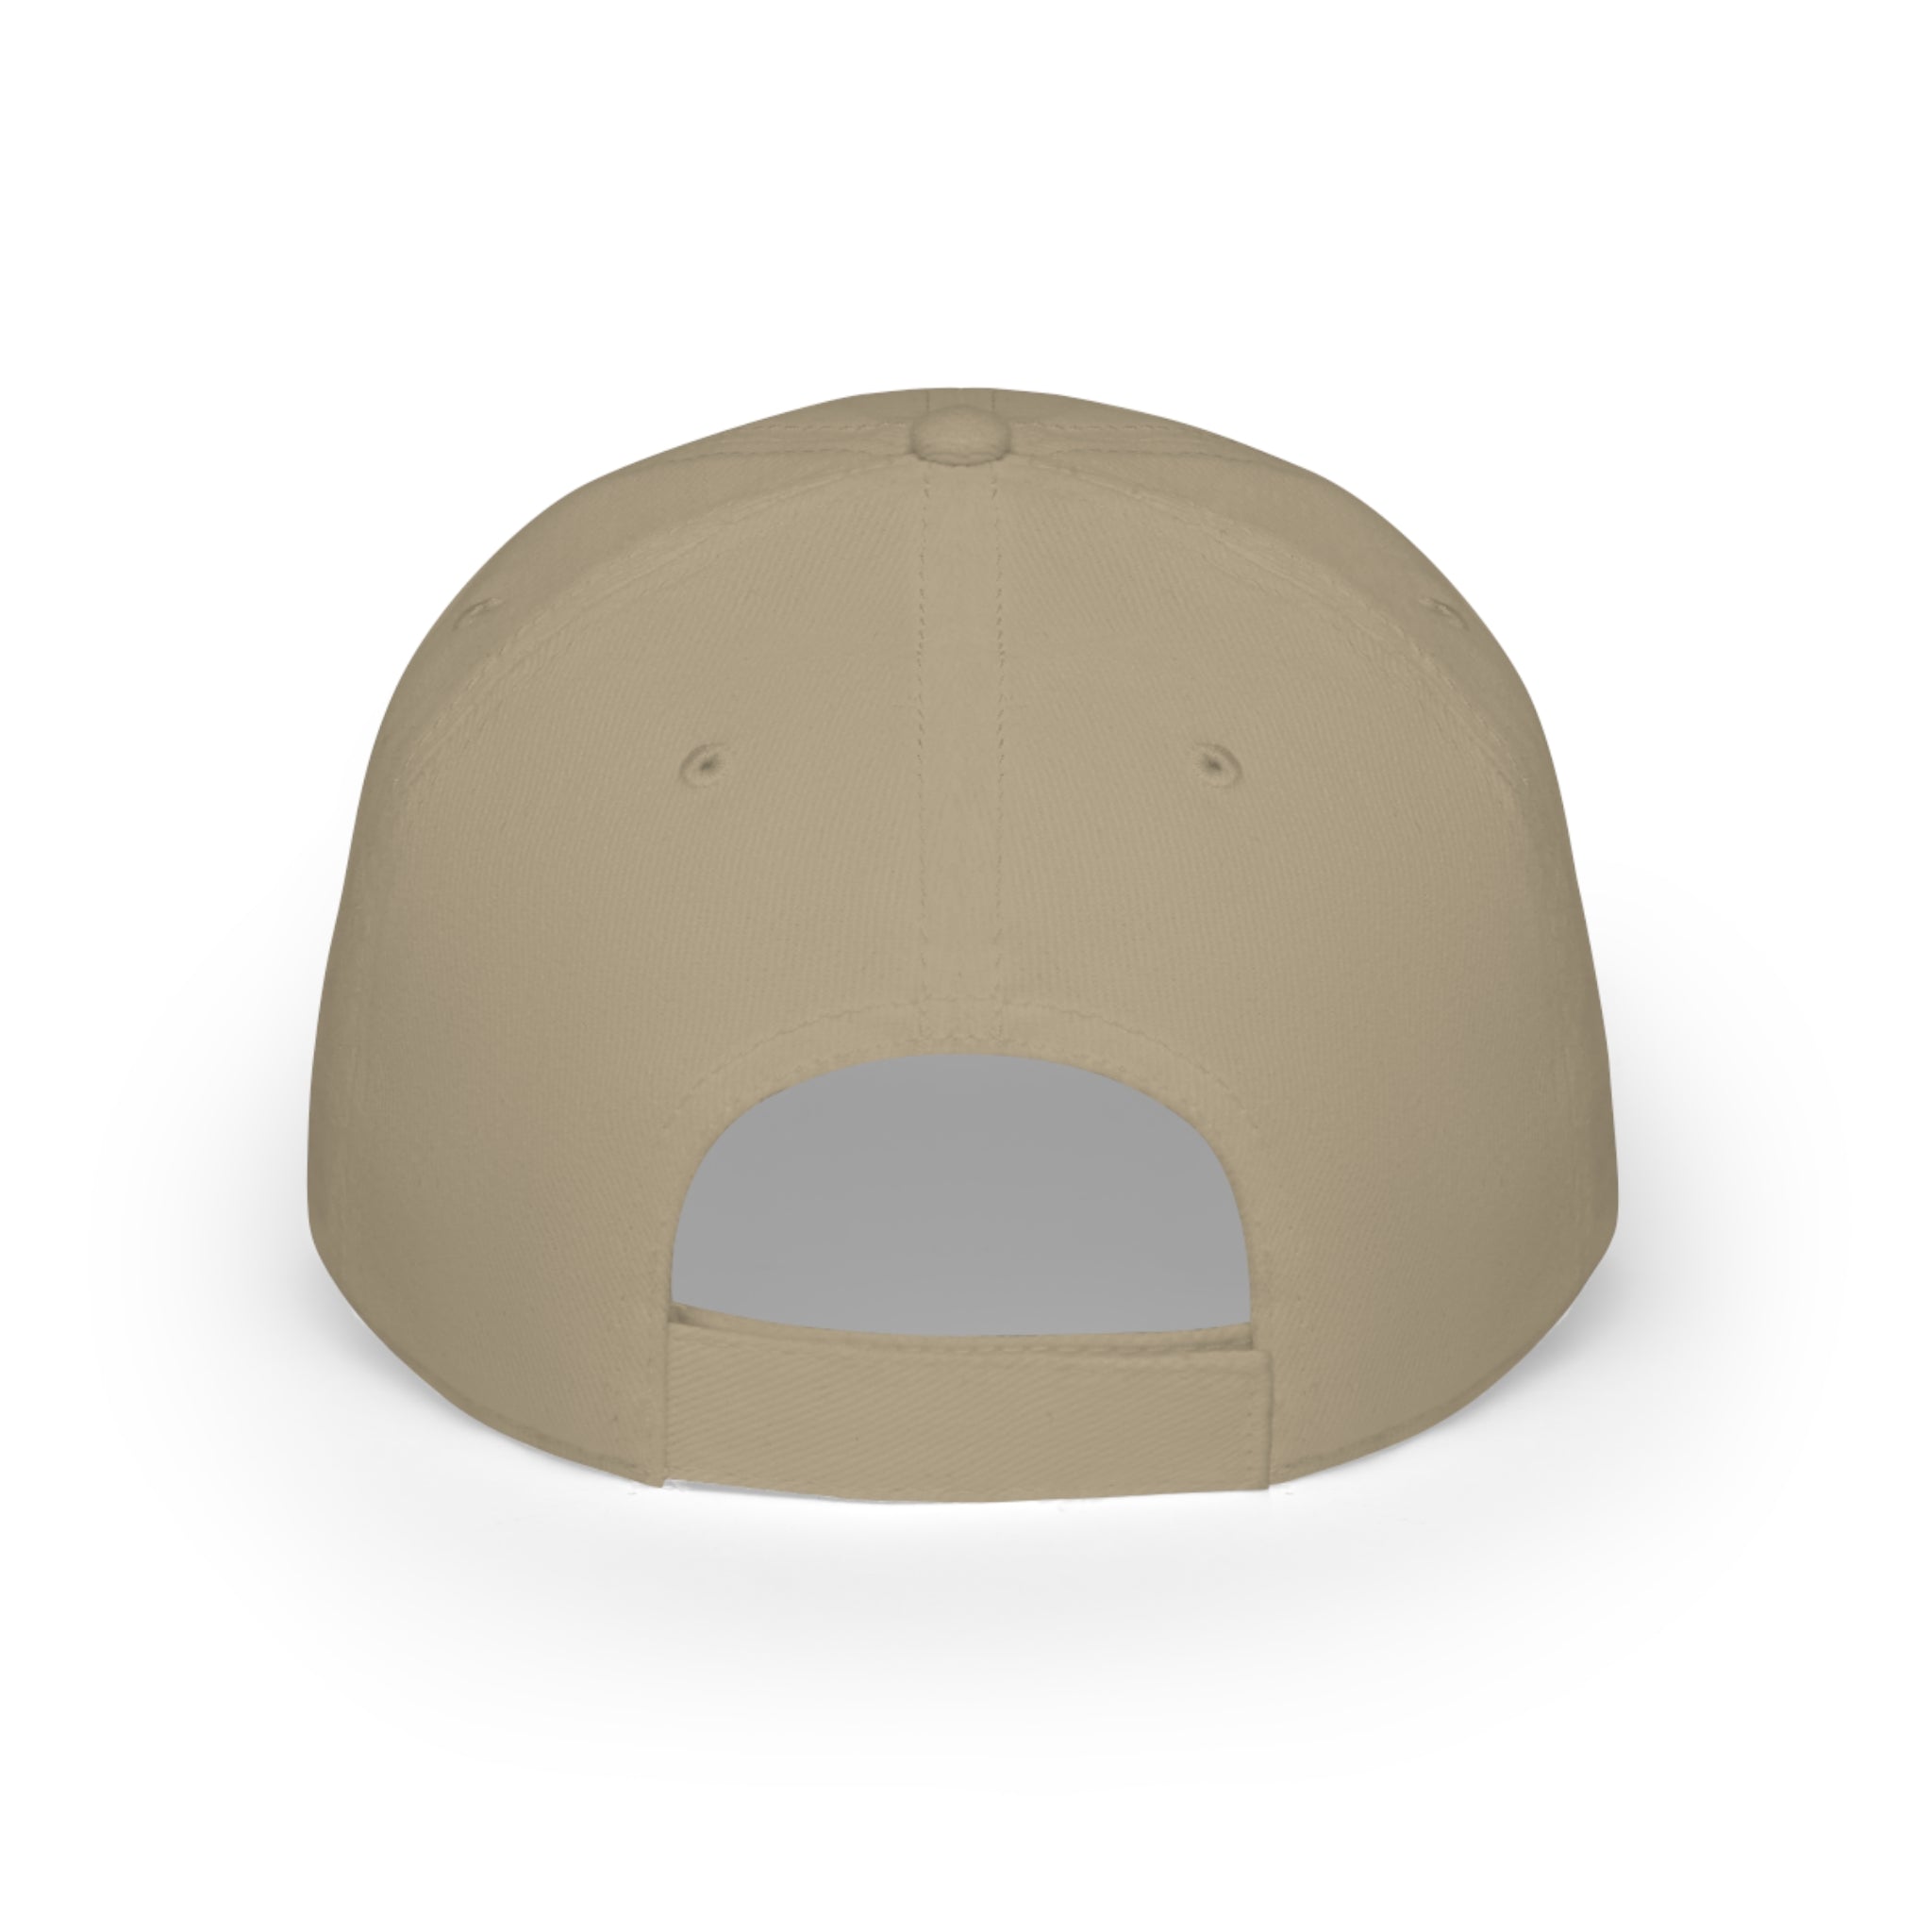 AGNS Classic Logo - Low Profile Baseball Cap